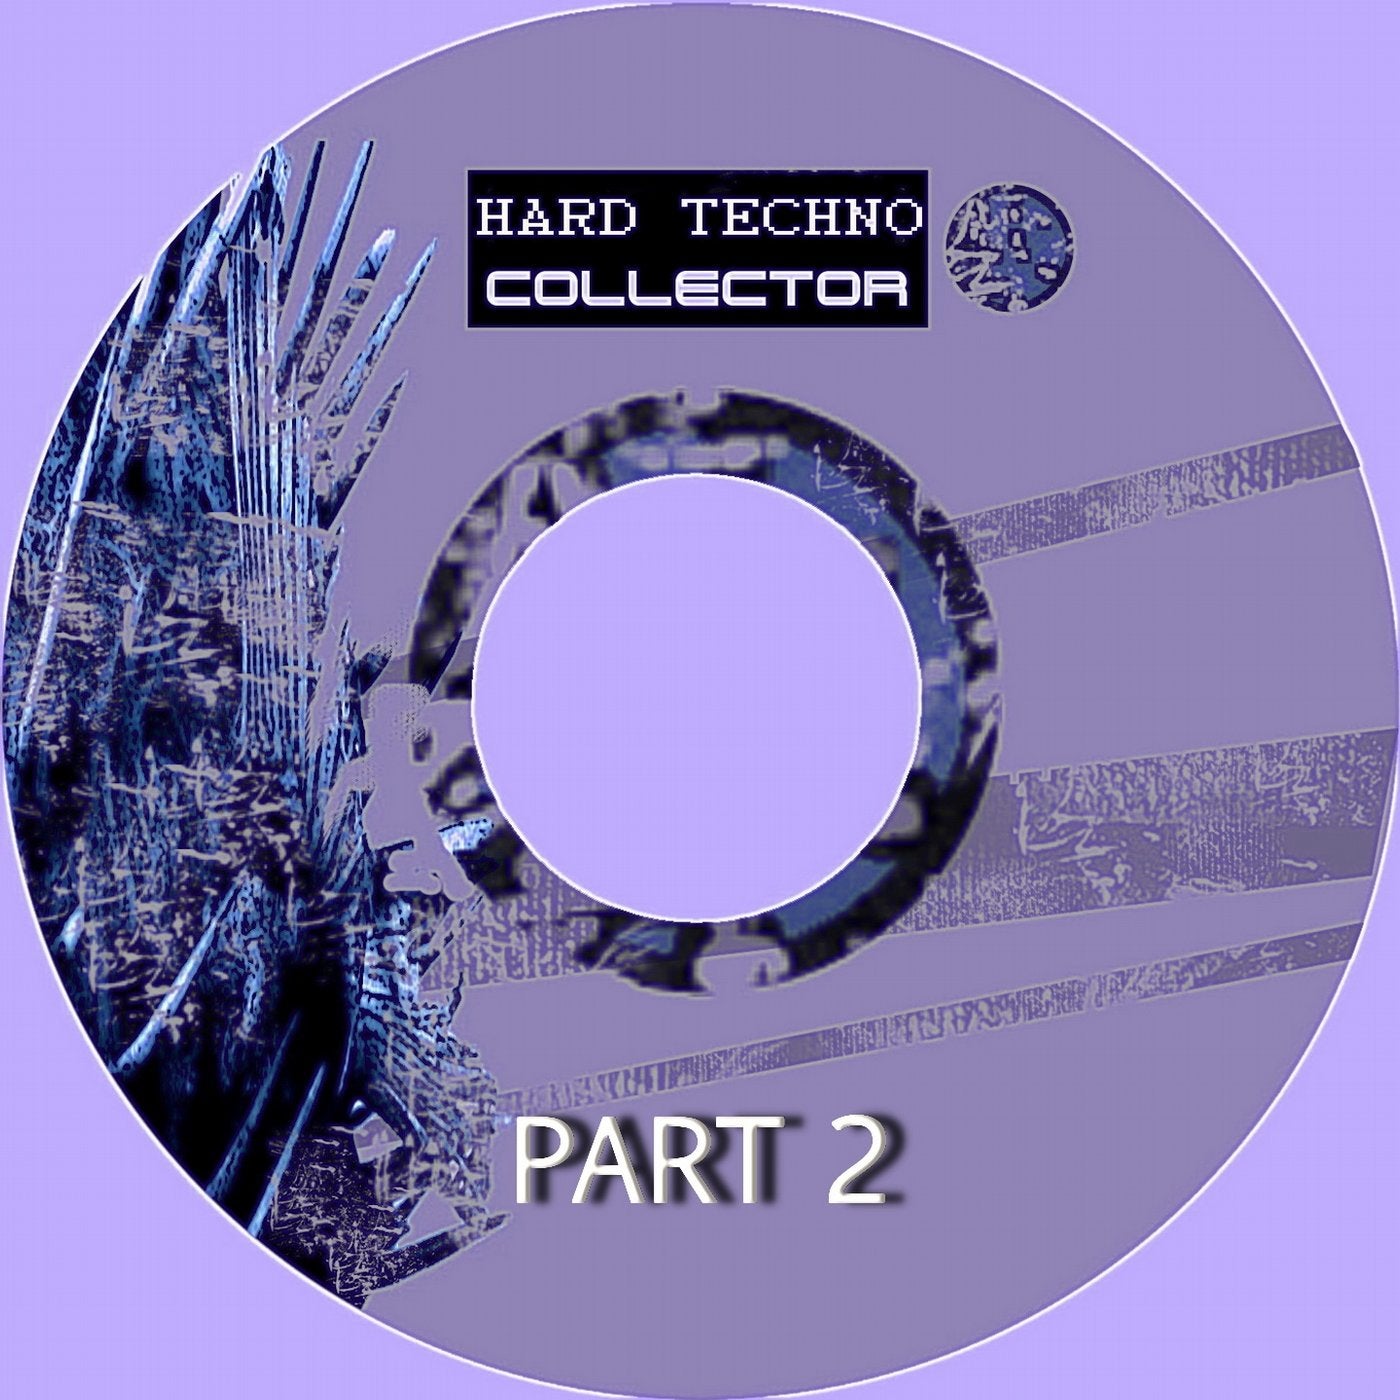 Hard techno collector, pt. 2